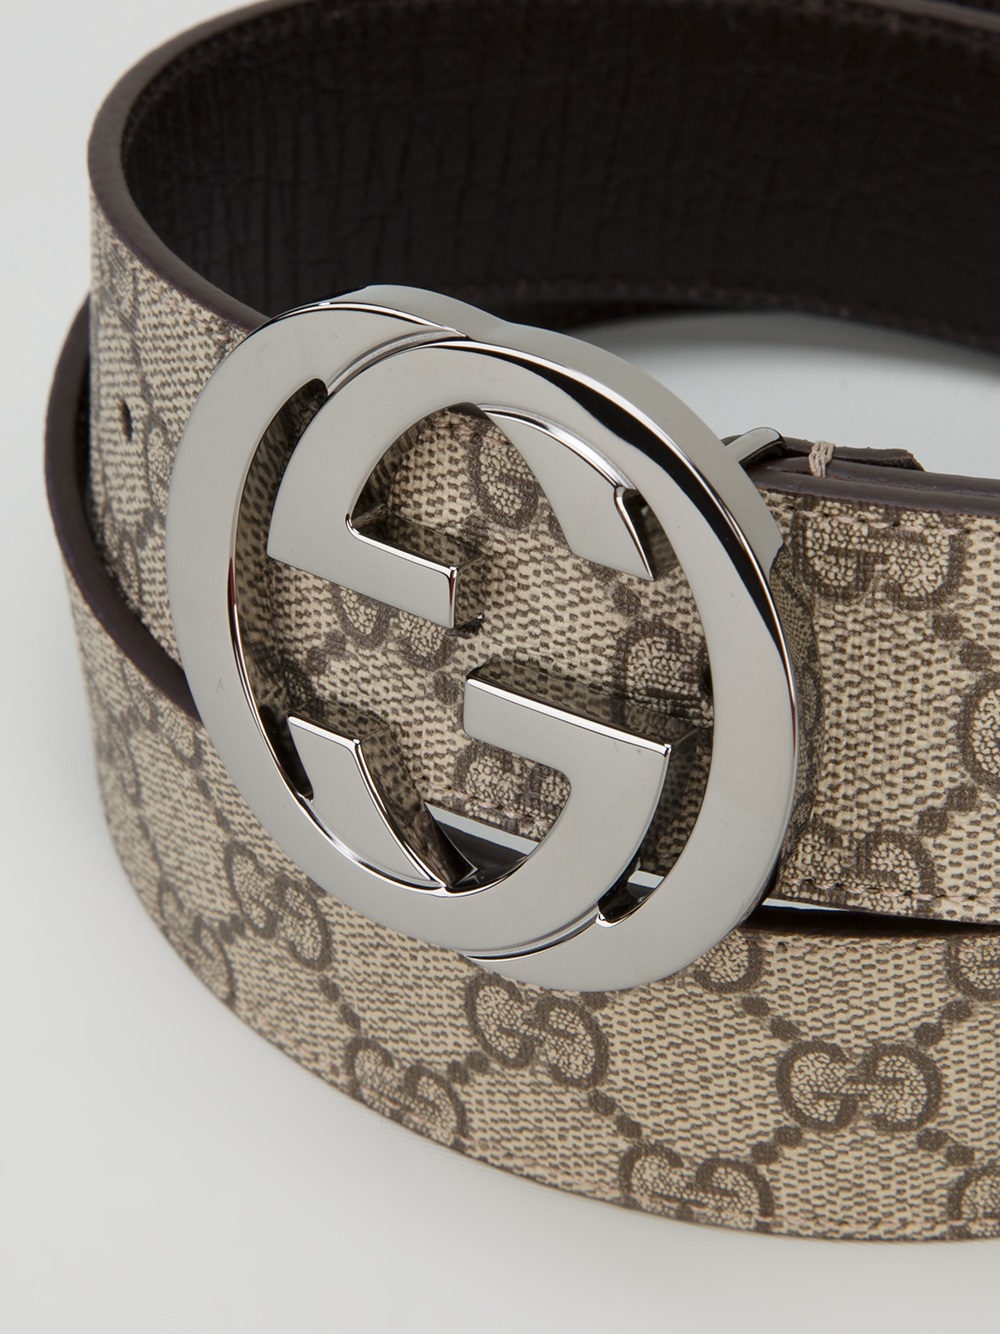 Belt Gucci Louis Vuitton Luxury goods, Gucci Men's Leather Belt, leather,  gucci Belt, men Suit png